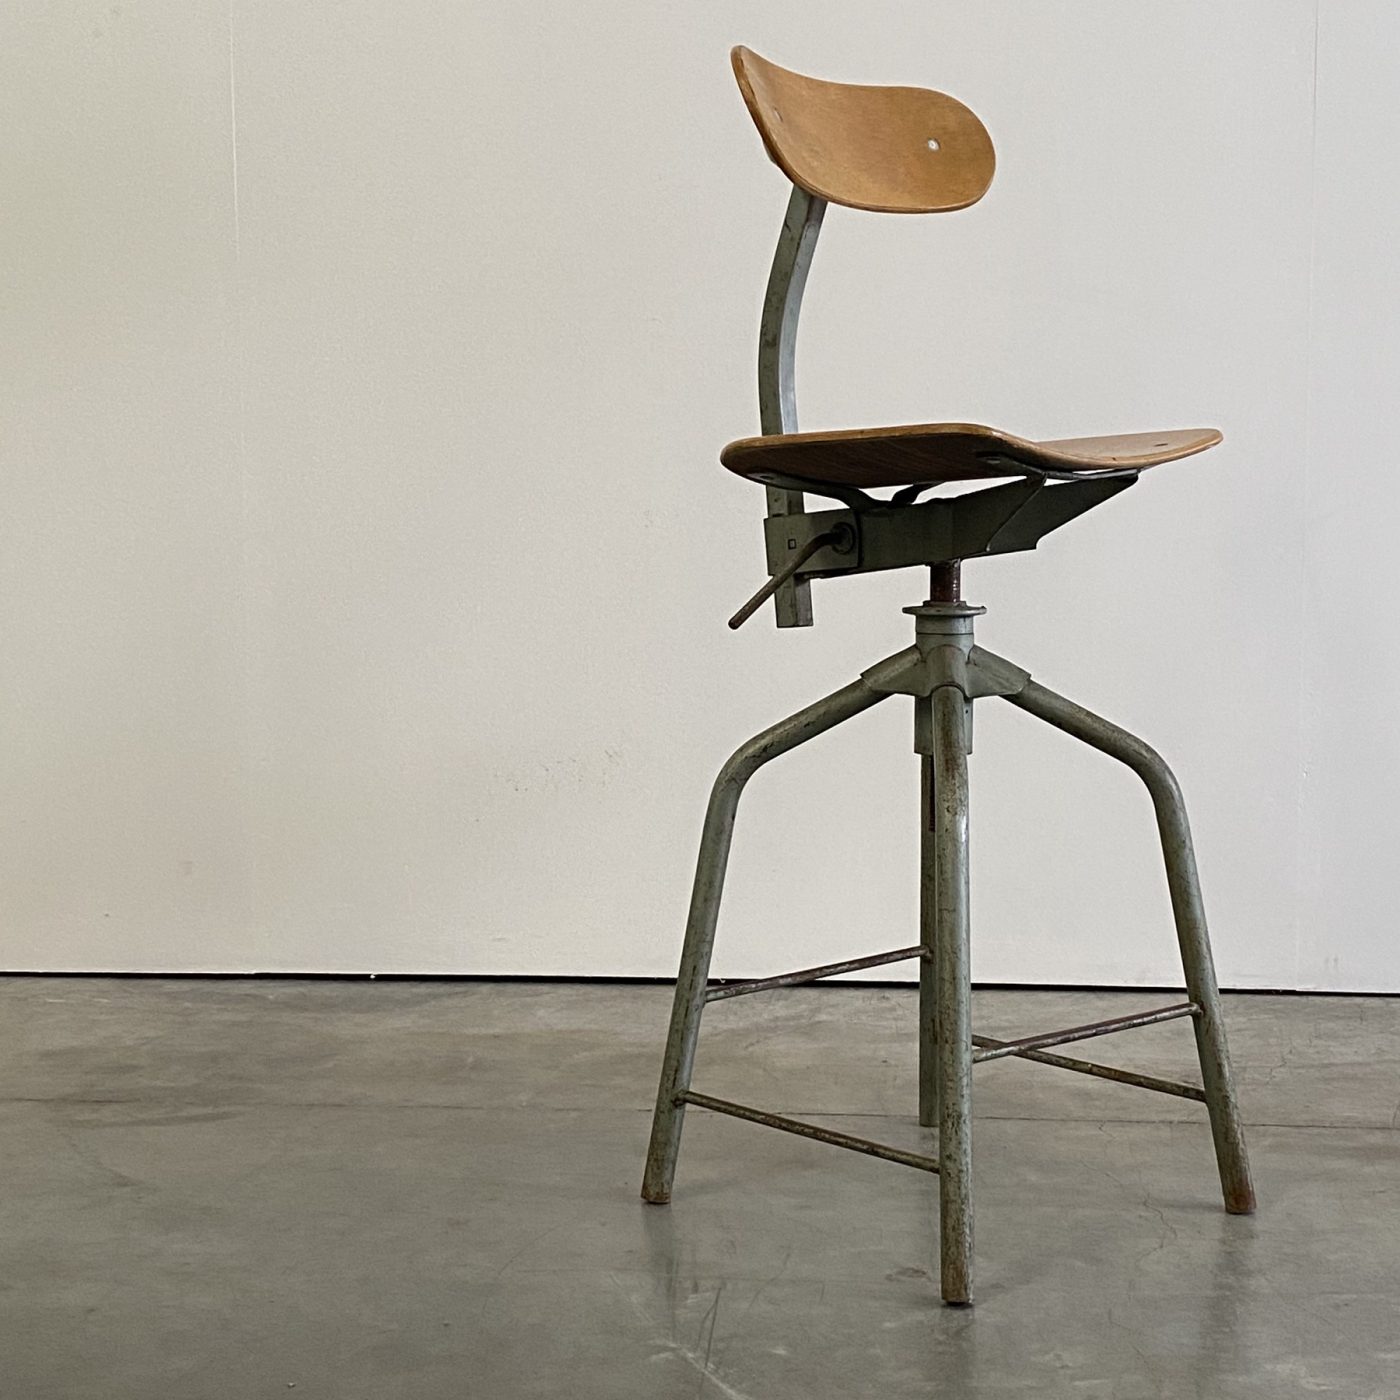 objet-vagabond-industrial-chairs0004